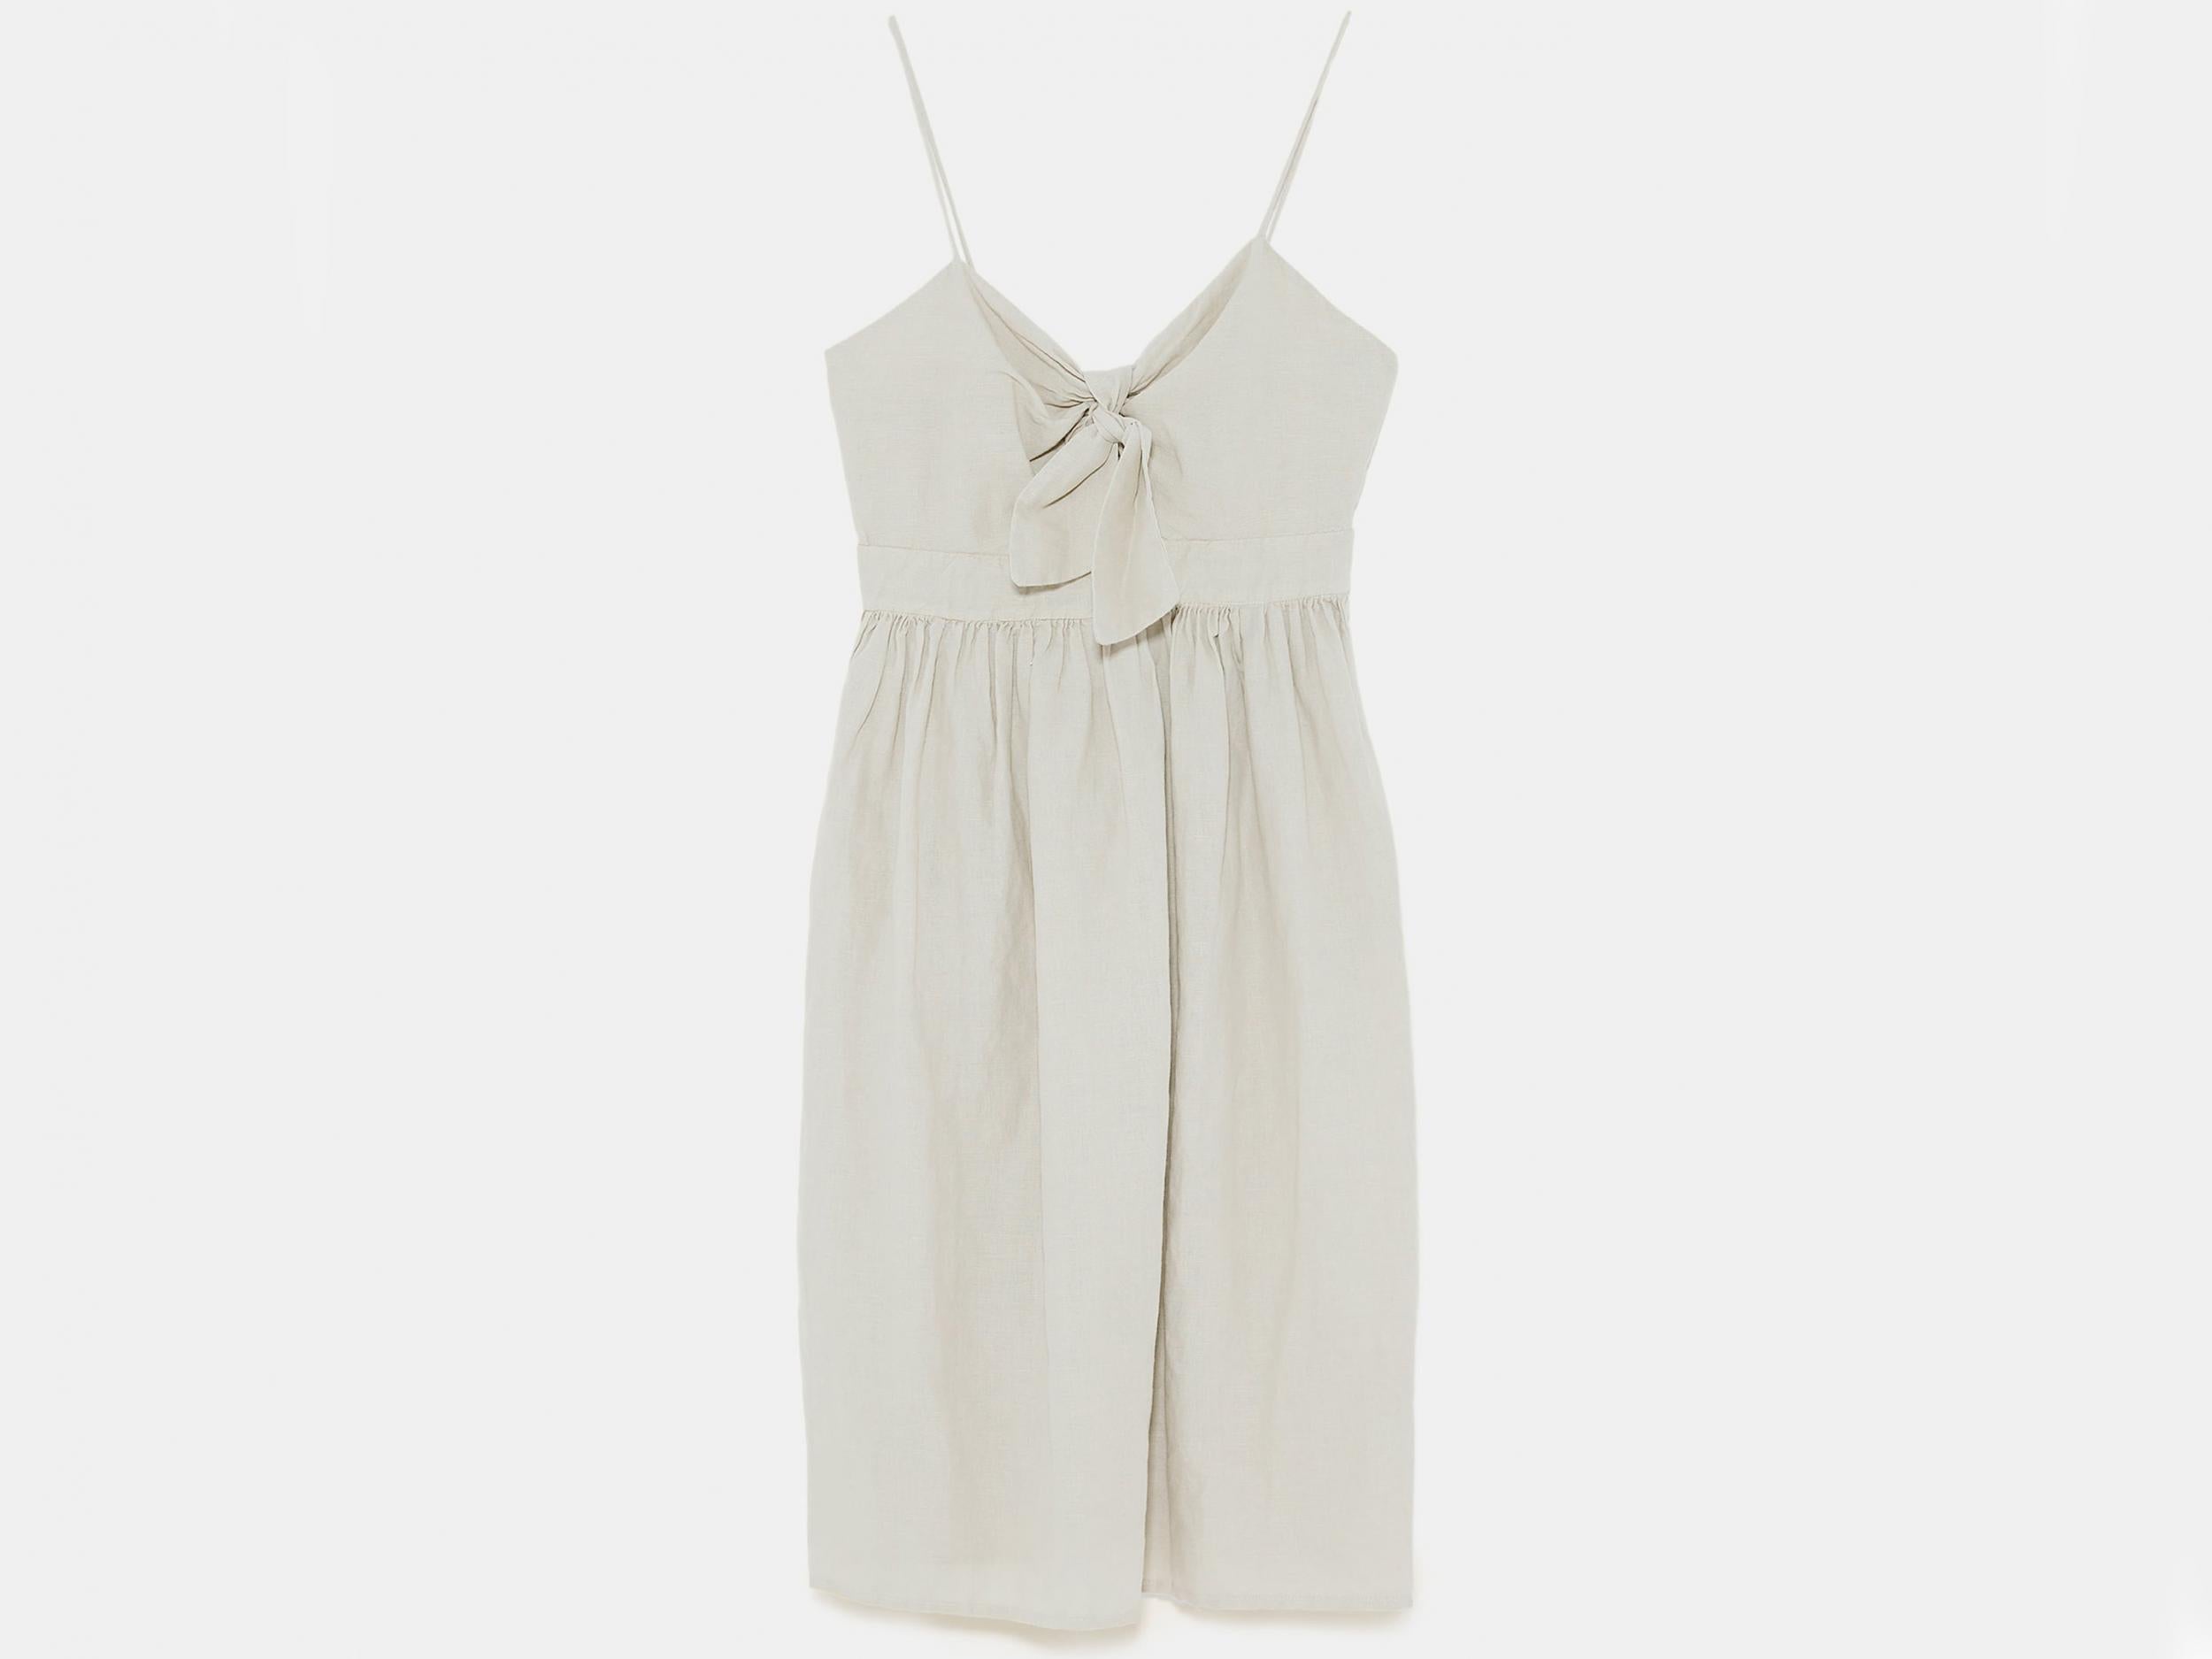 Knotted Dress, £29.99, Zara